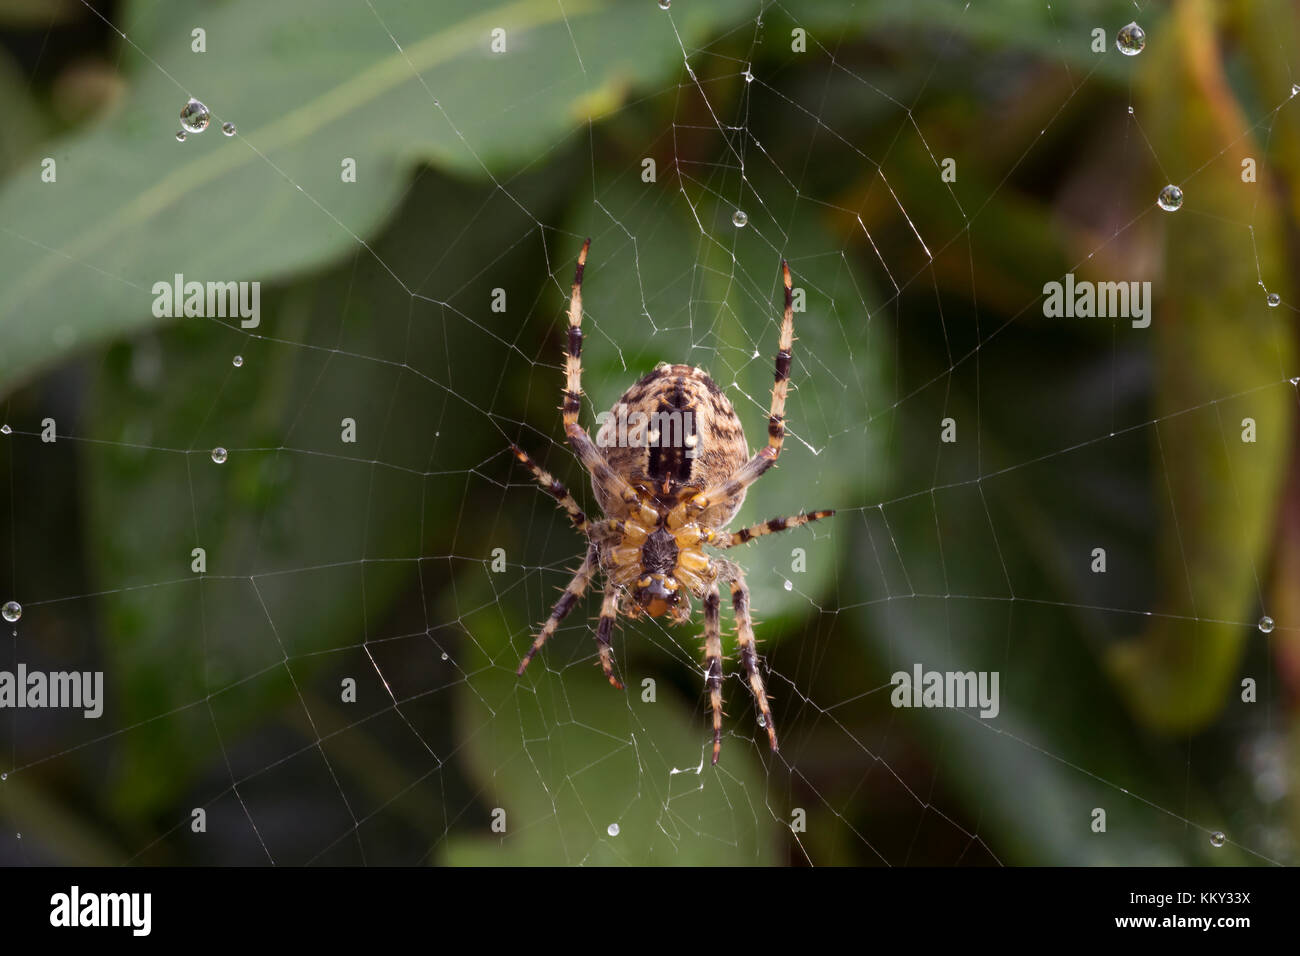 European garden spider, Araneus diadematus, in web in garden in Dorset, UK Stock Photo